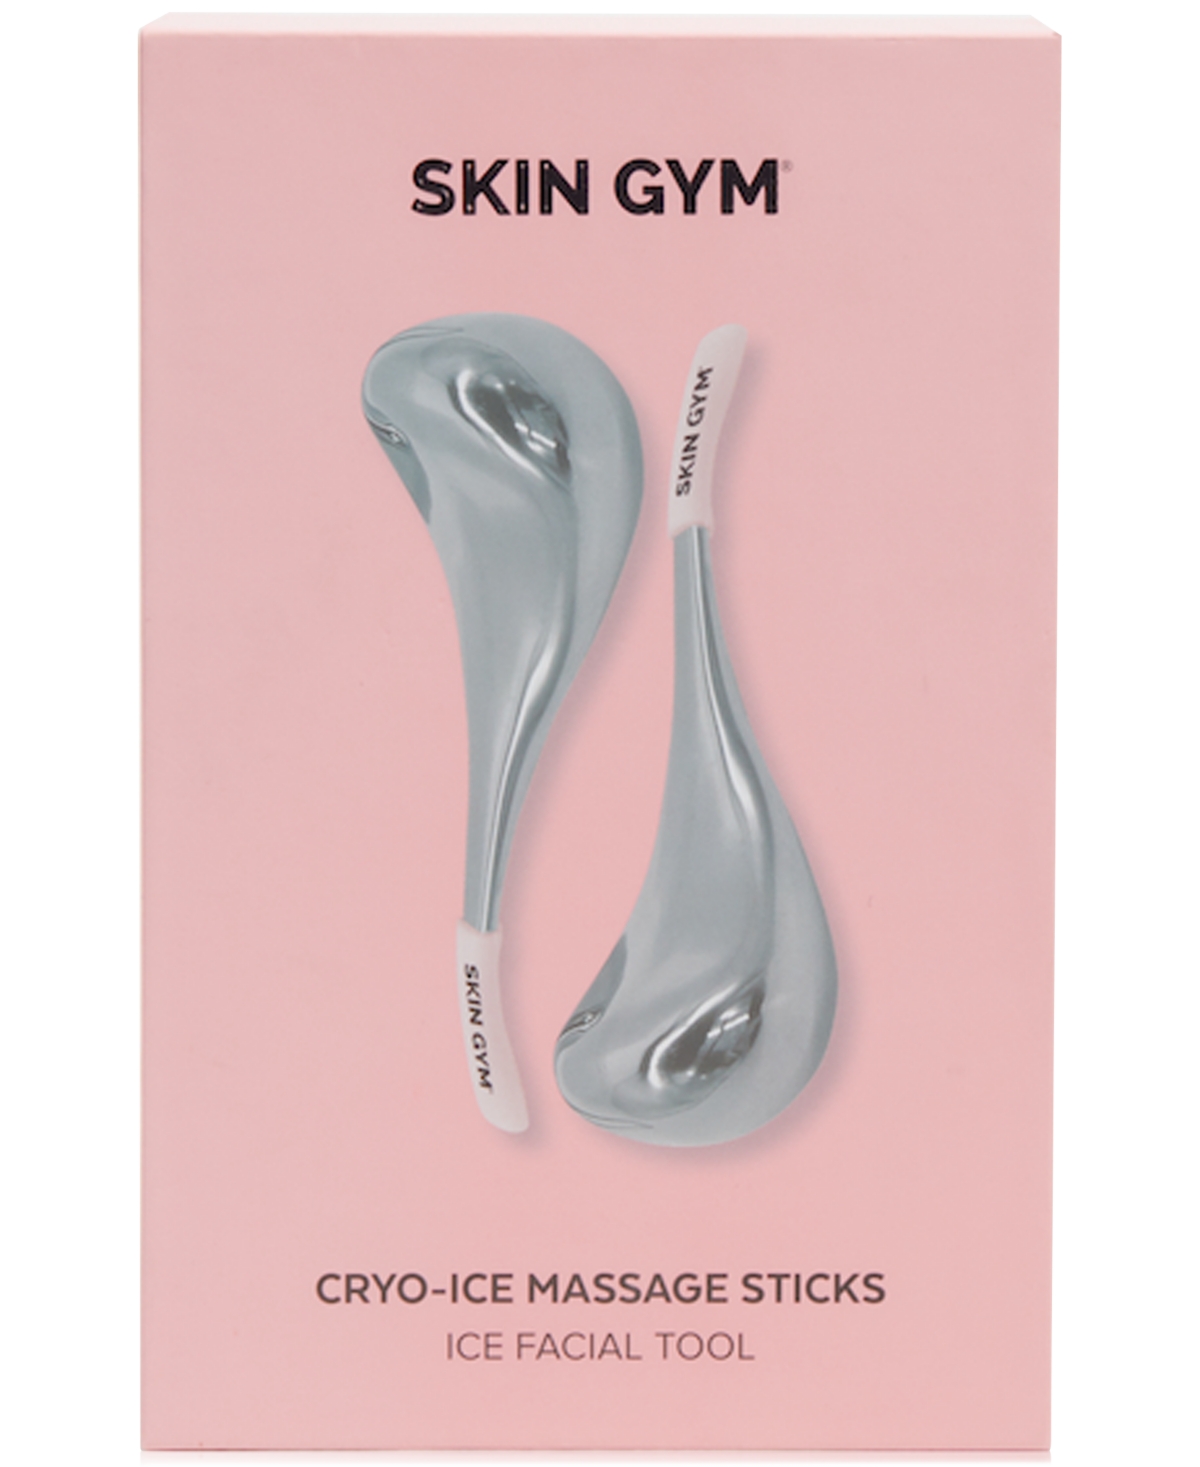 Skin Gym Cryo-ice Massage Sticks